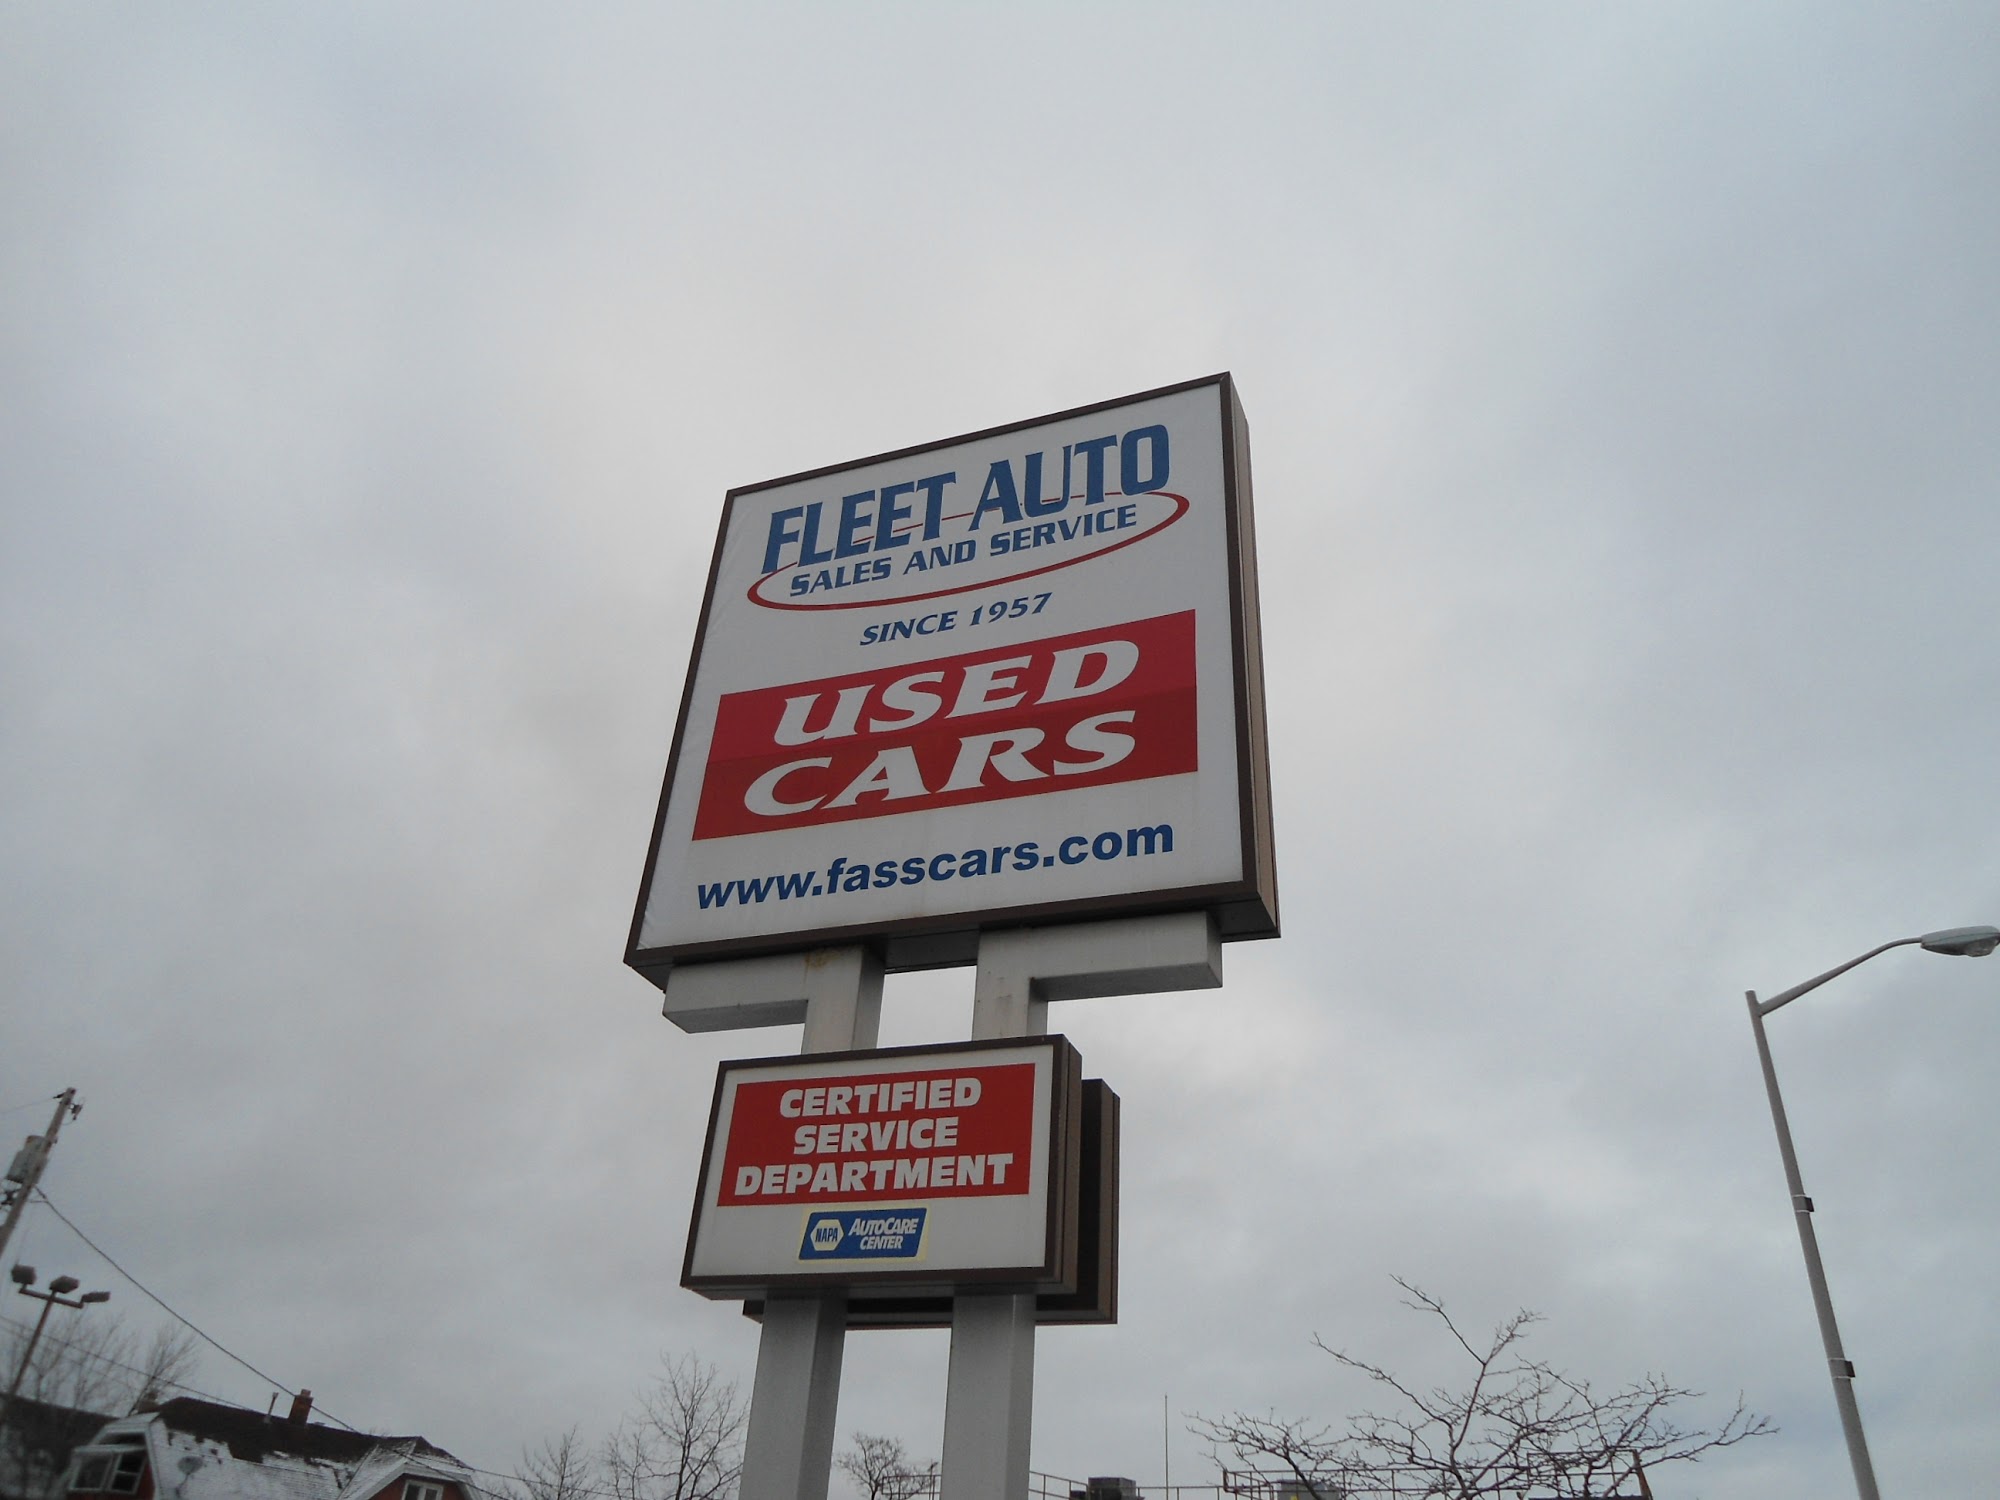 Fleet Auto Sales and Services